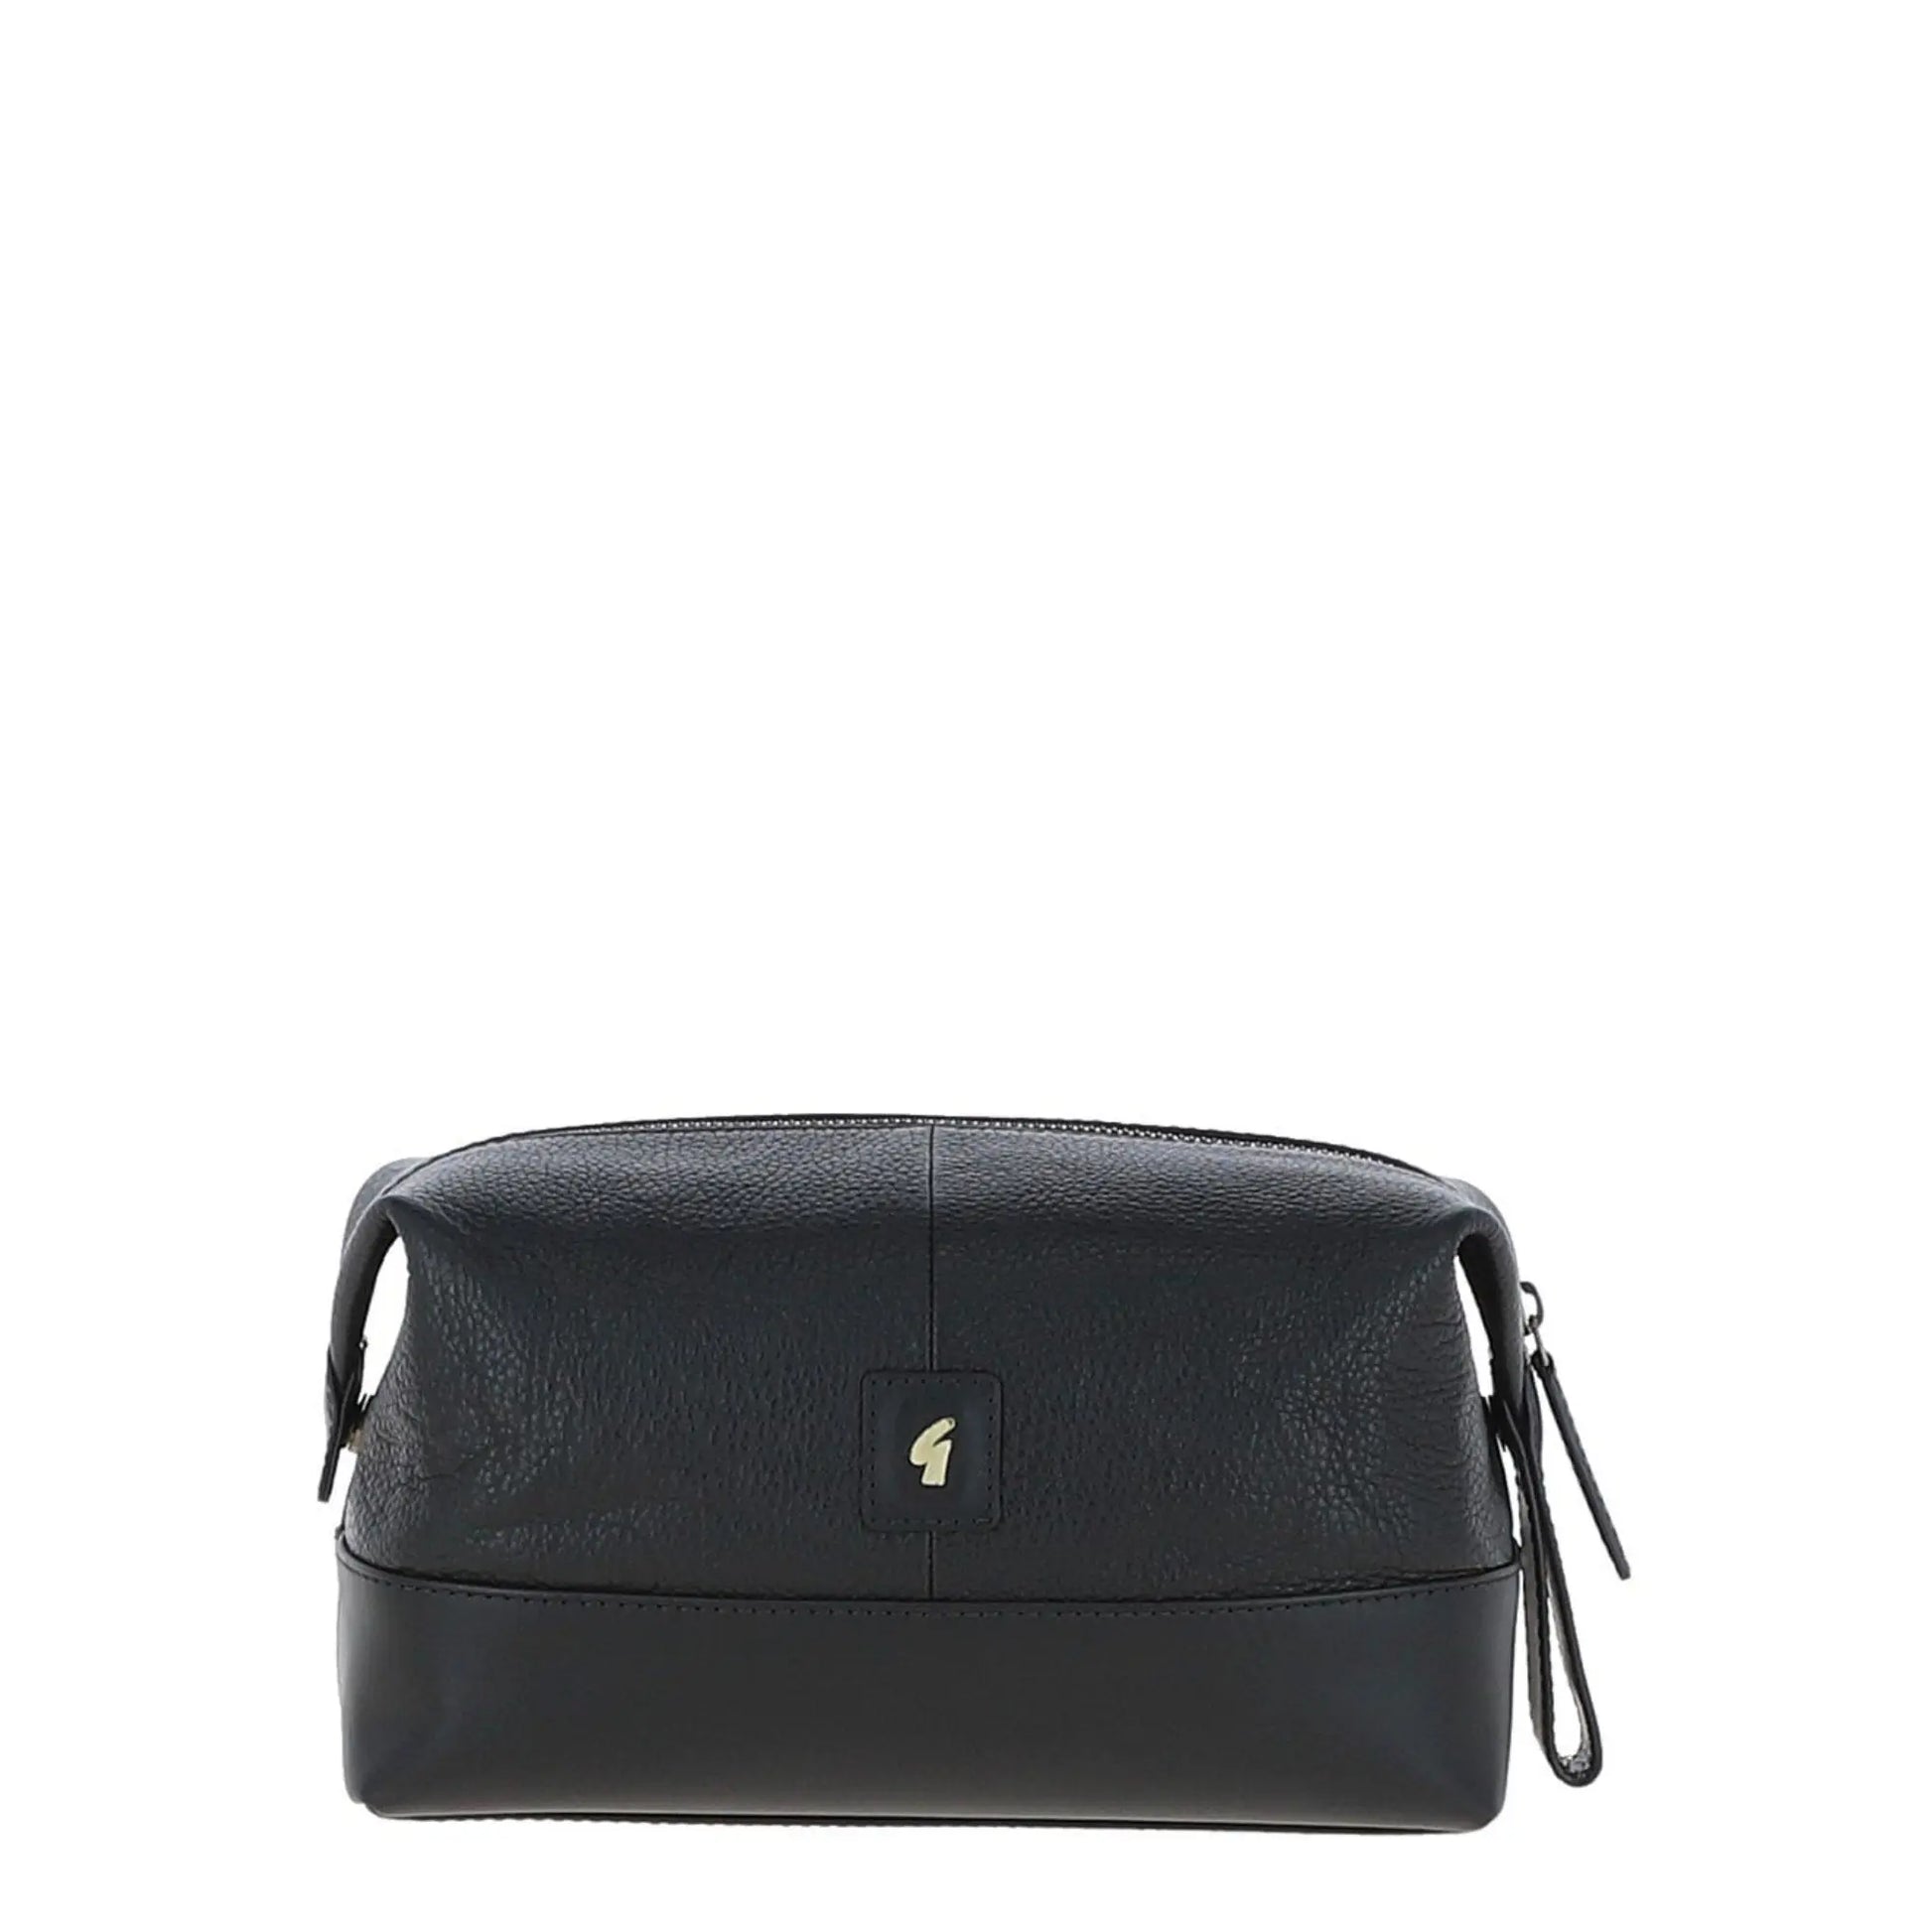 Buy Gabicci Vintage Milo Leather Wash Bag - Black | Wash Bags at Woven Durham